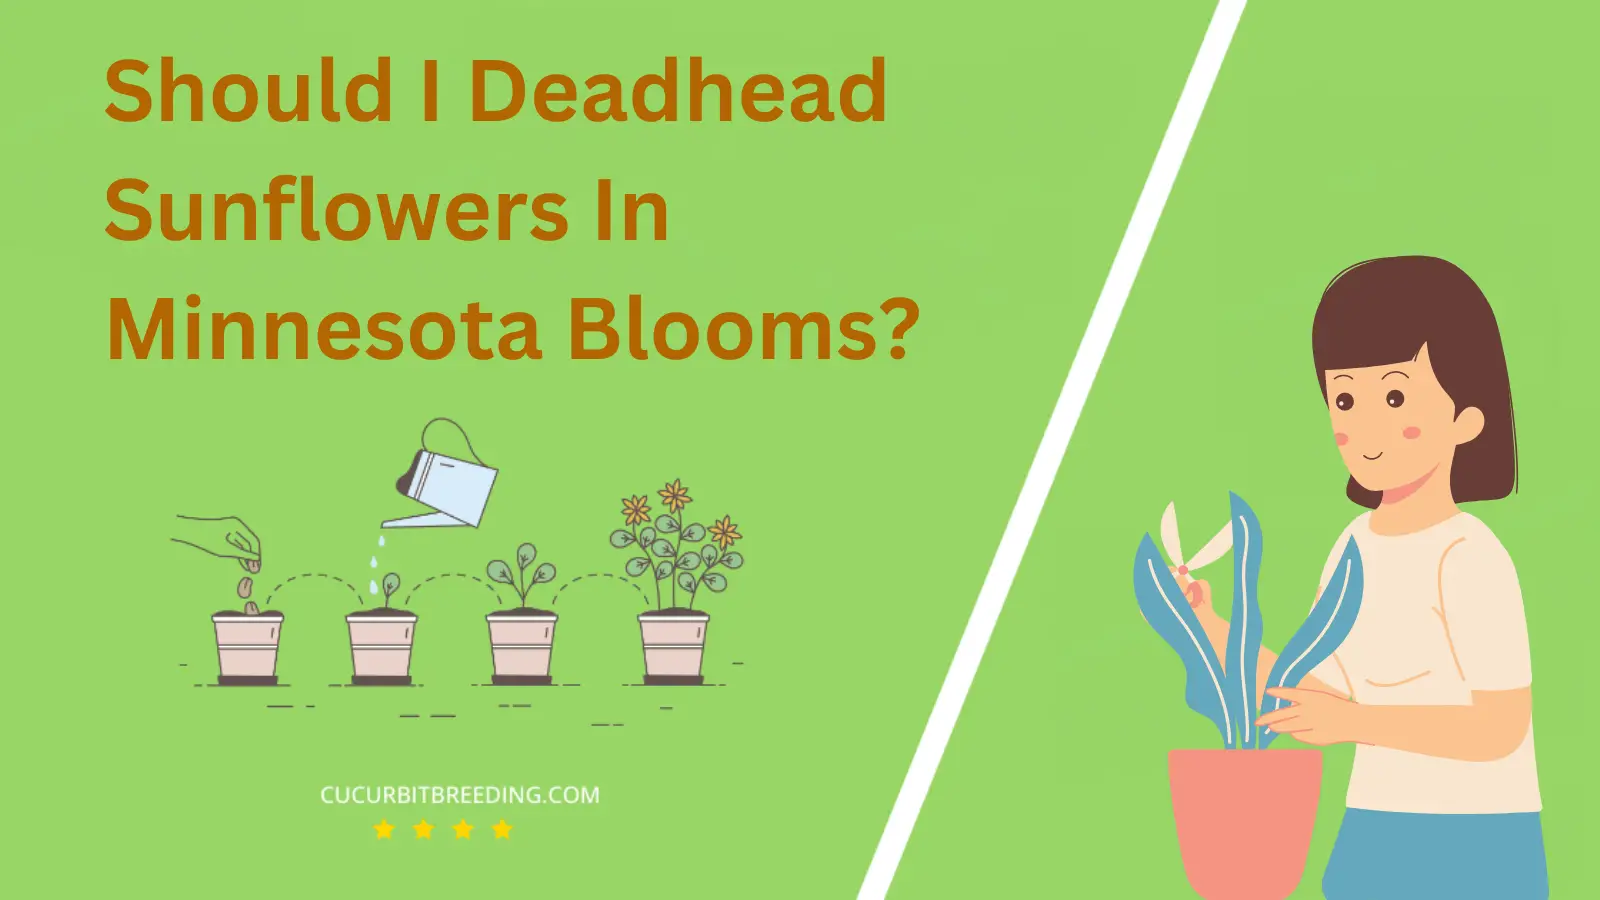 Should I Deadhead Sunflowers In Minnesota Blooms?